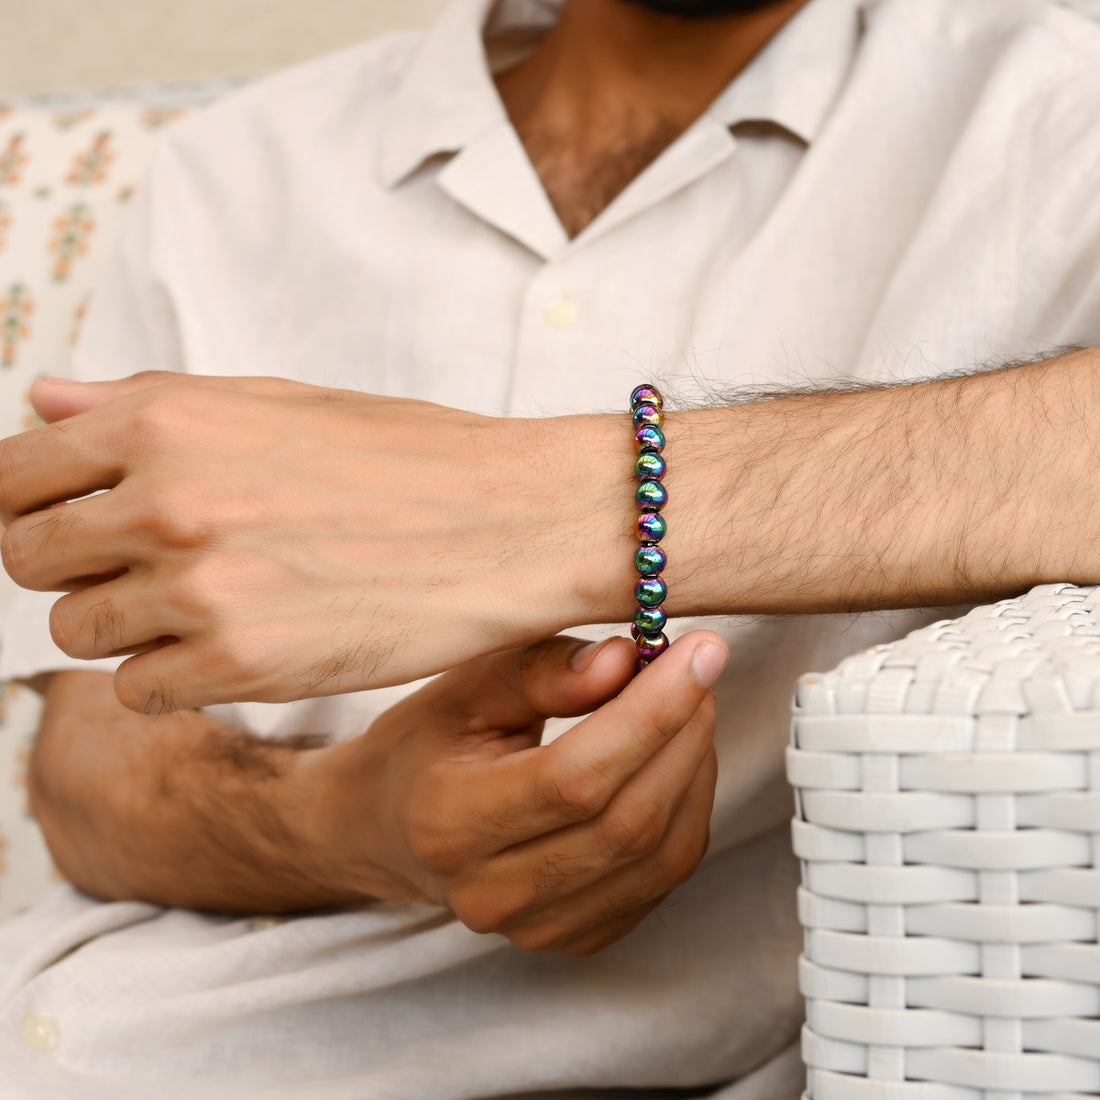 Mystic Hematite Harmony Stretch Bracelet on wrist - Stylish and grounding accessory